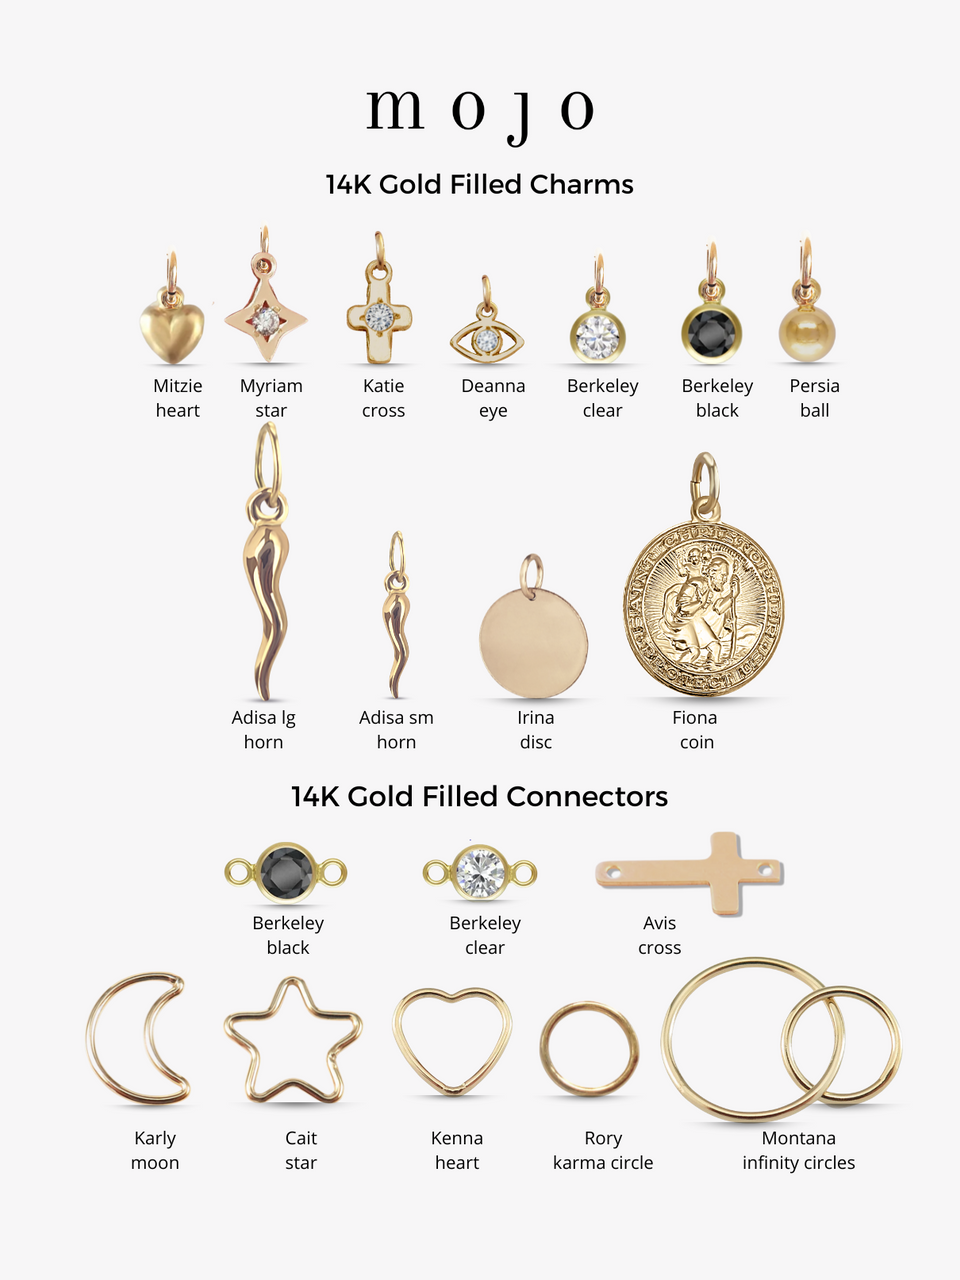 Fiona Gold Filled Saint Round Coin Bracelet Charm